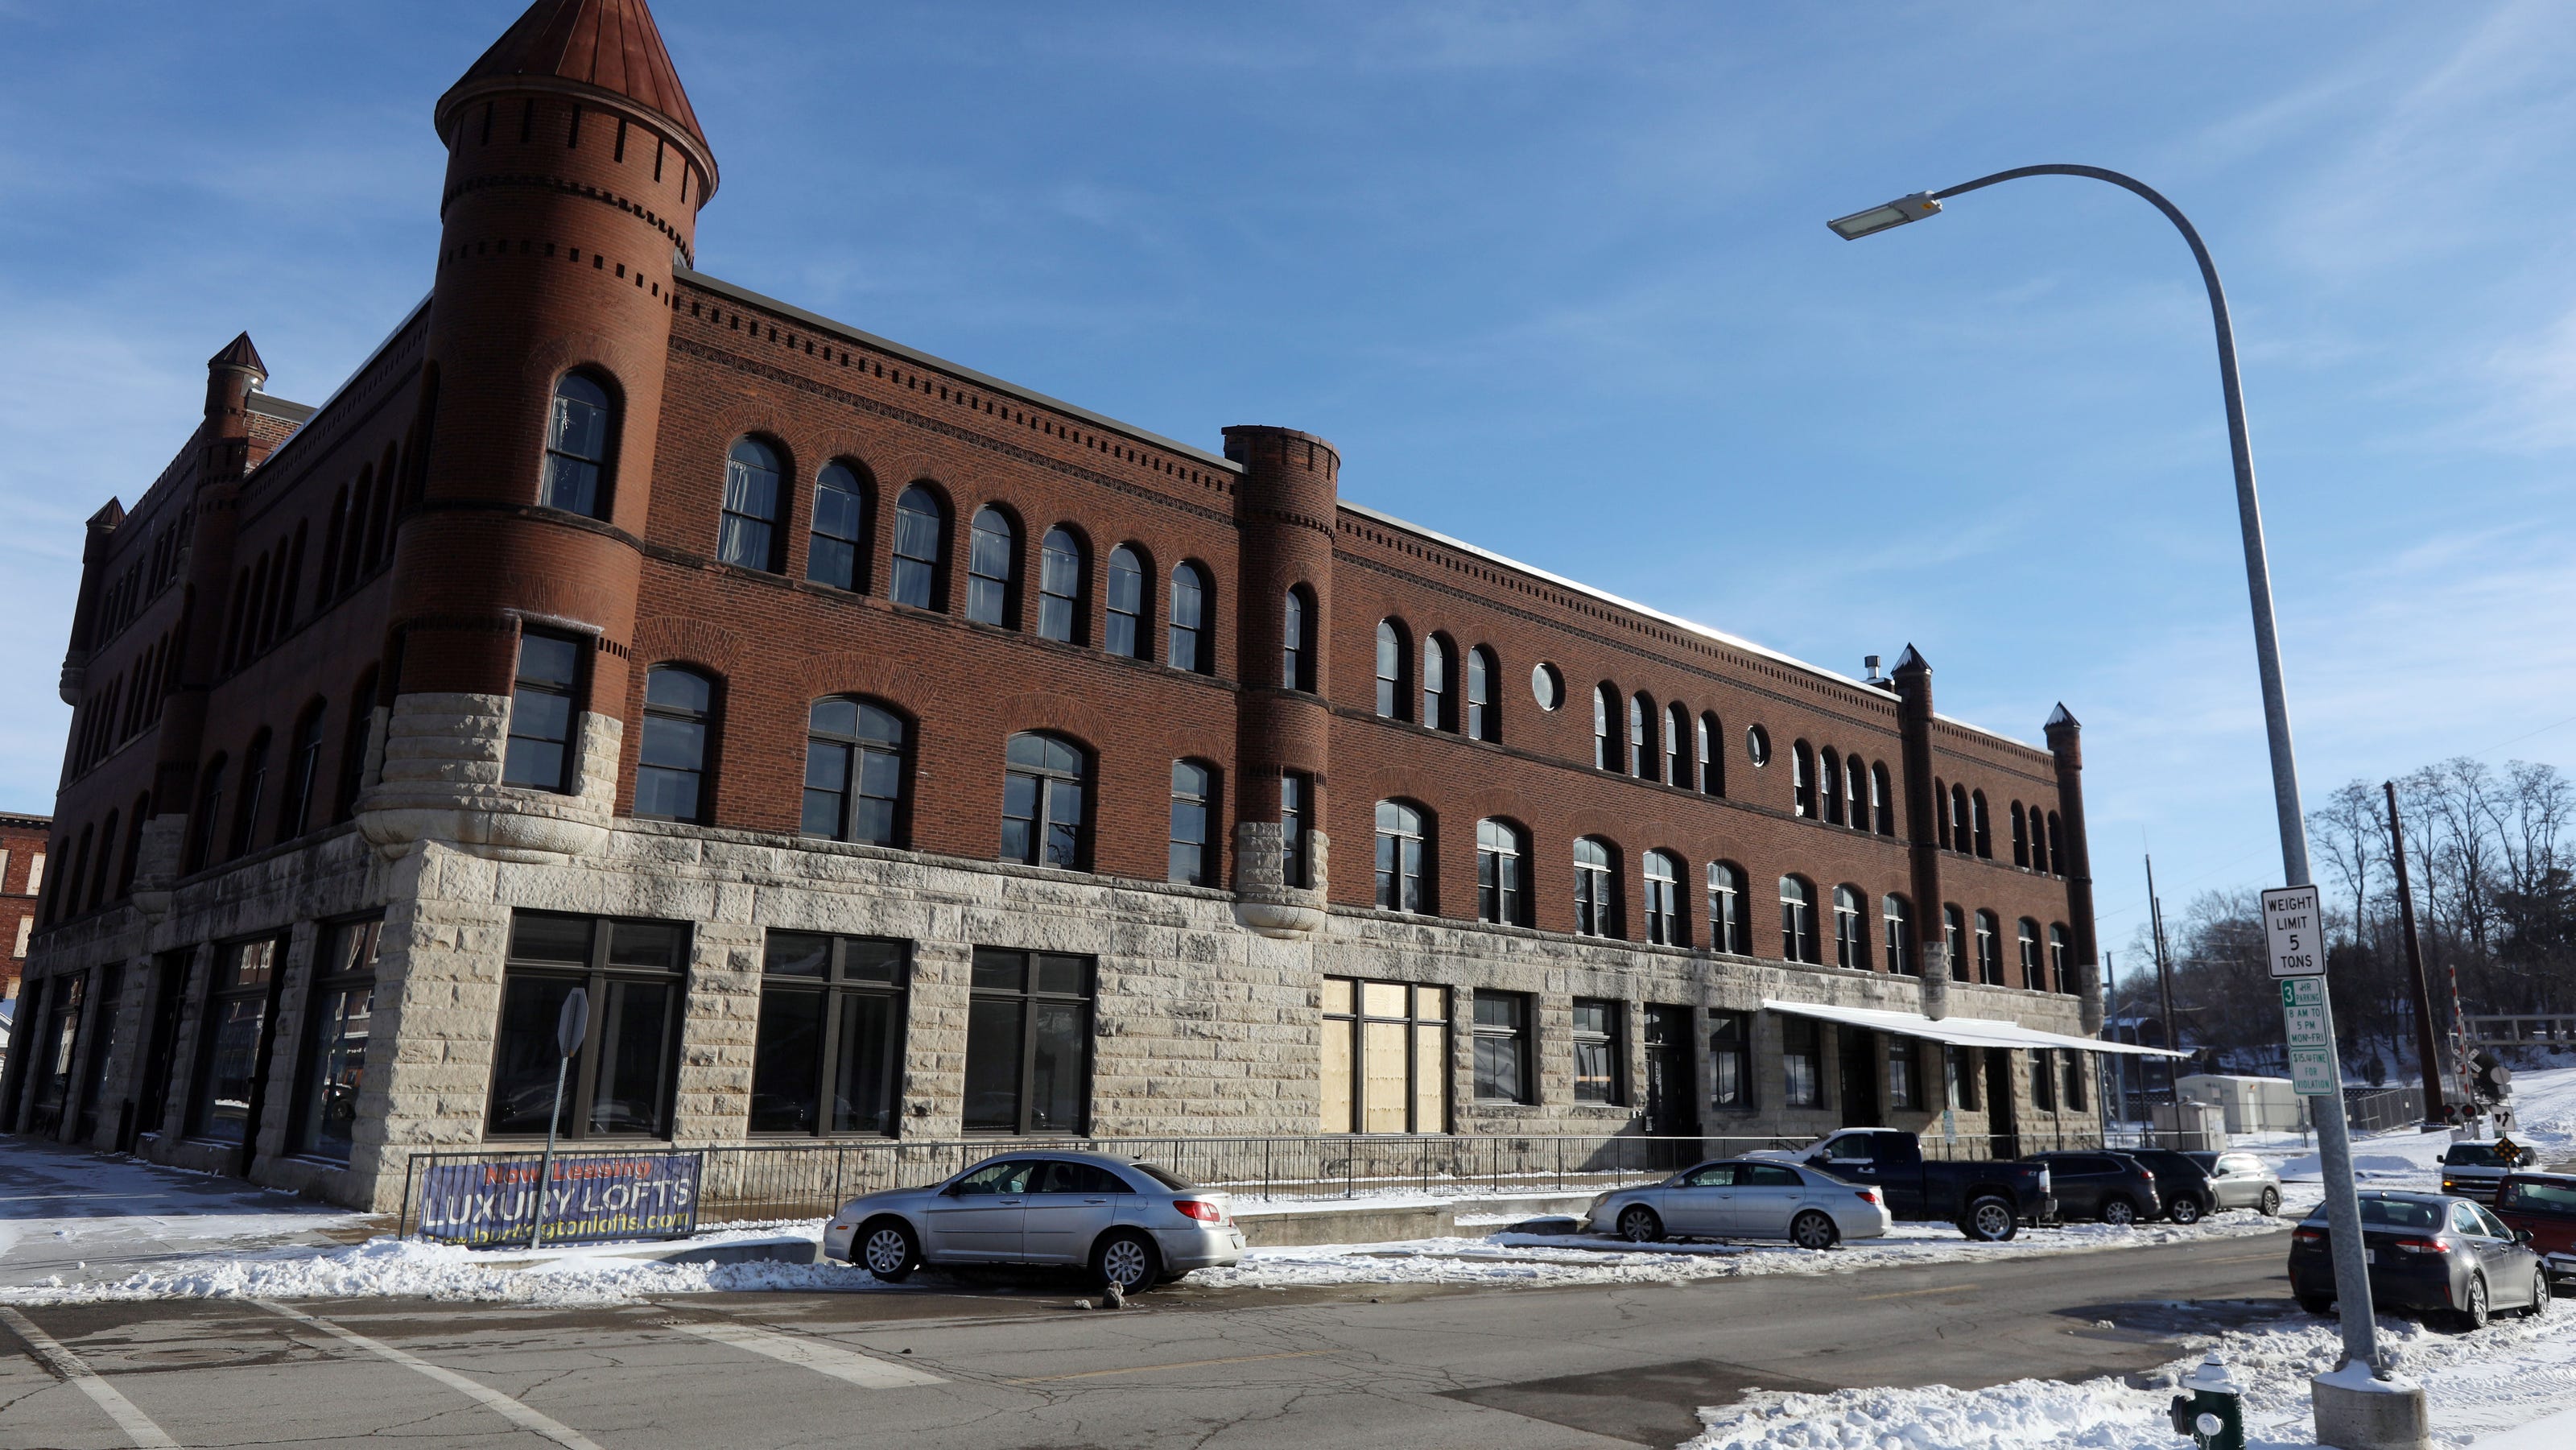 Downtown Burlington, Iowa, is experiencing a development boom